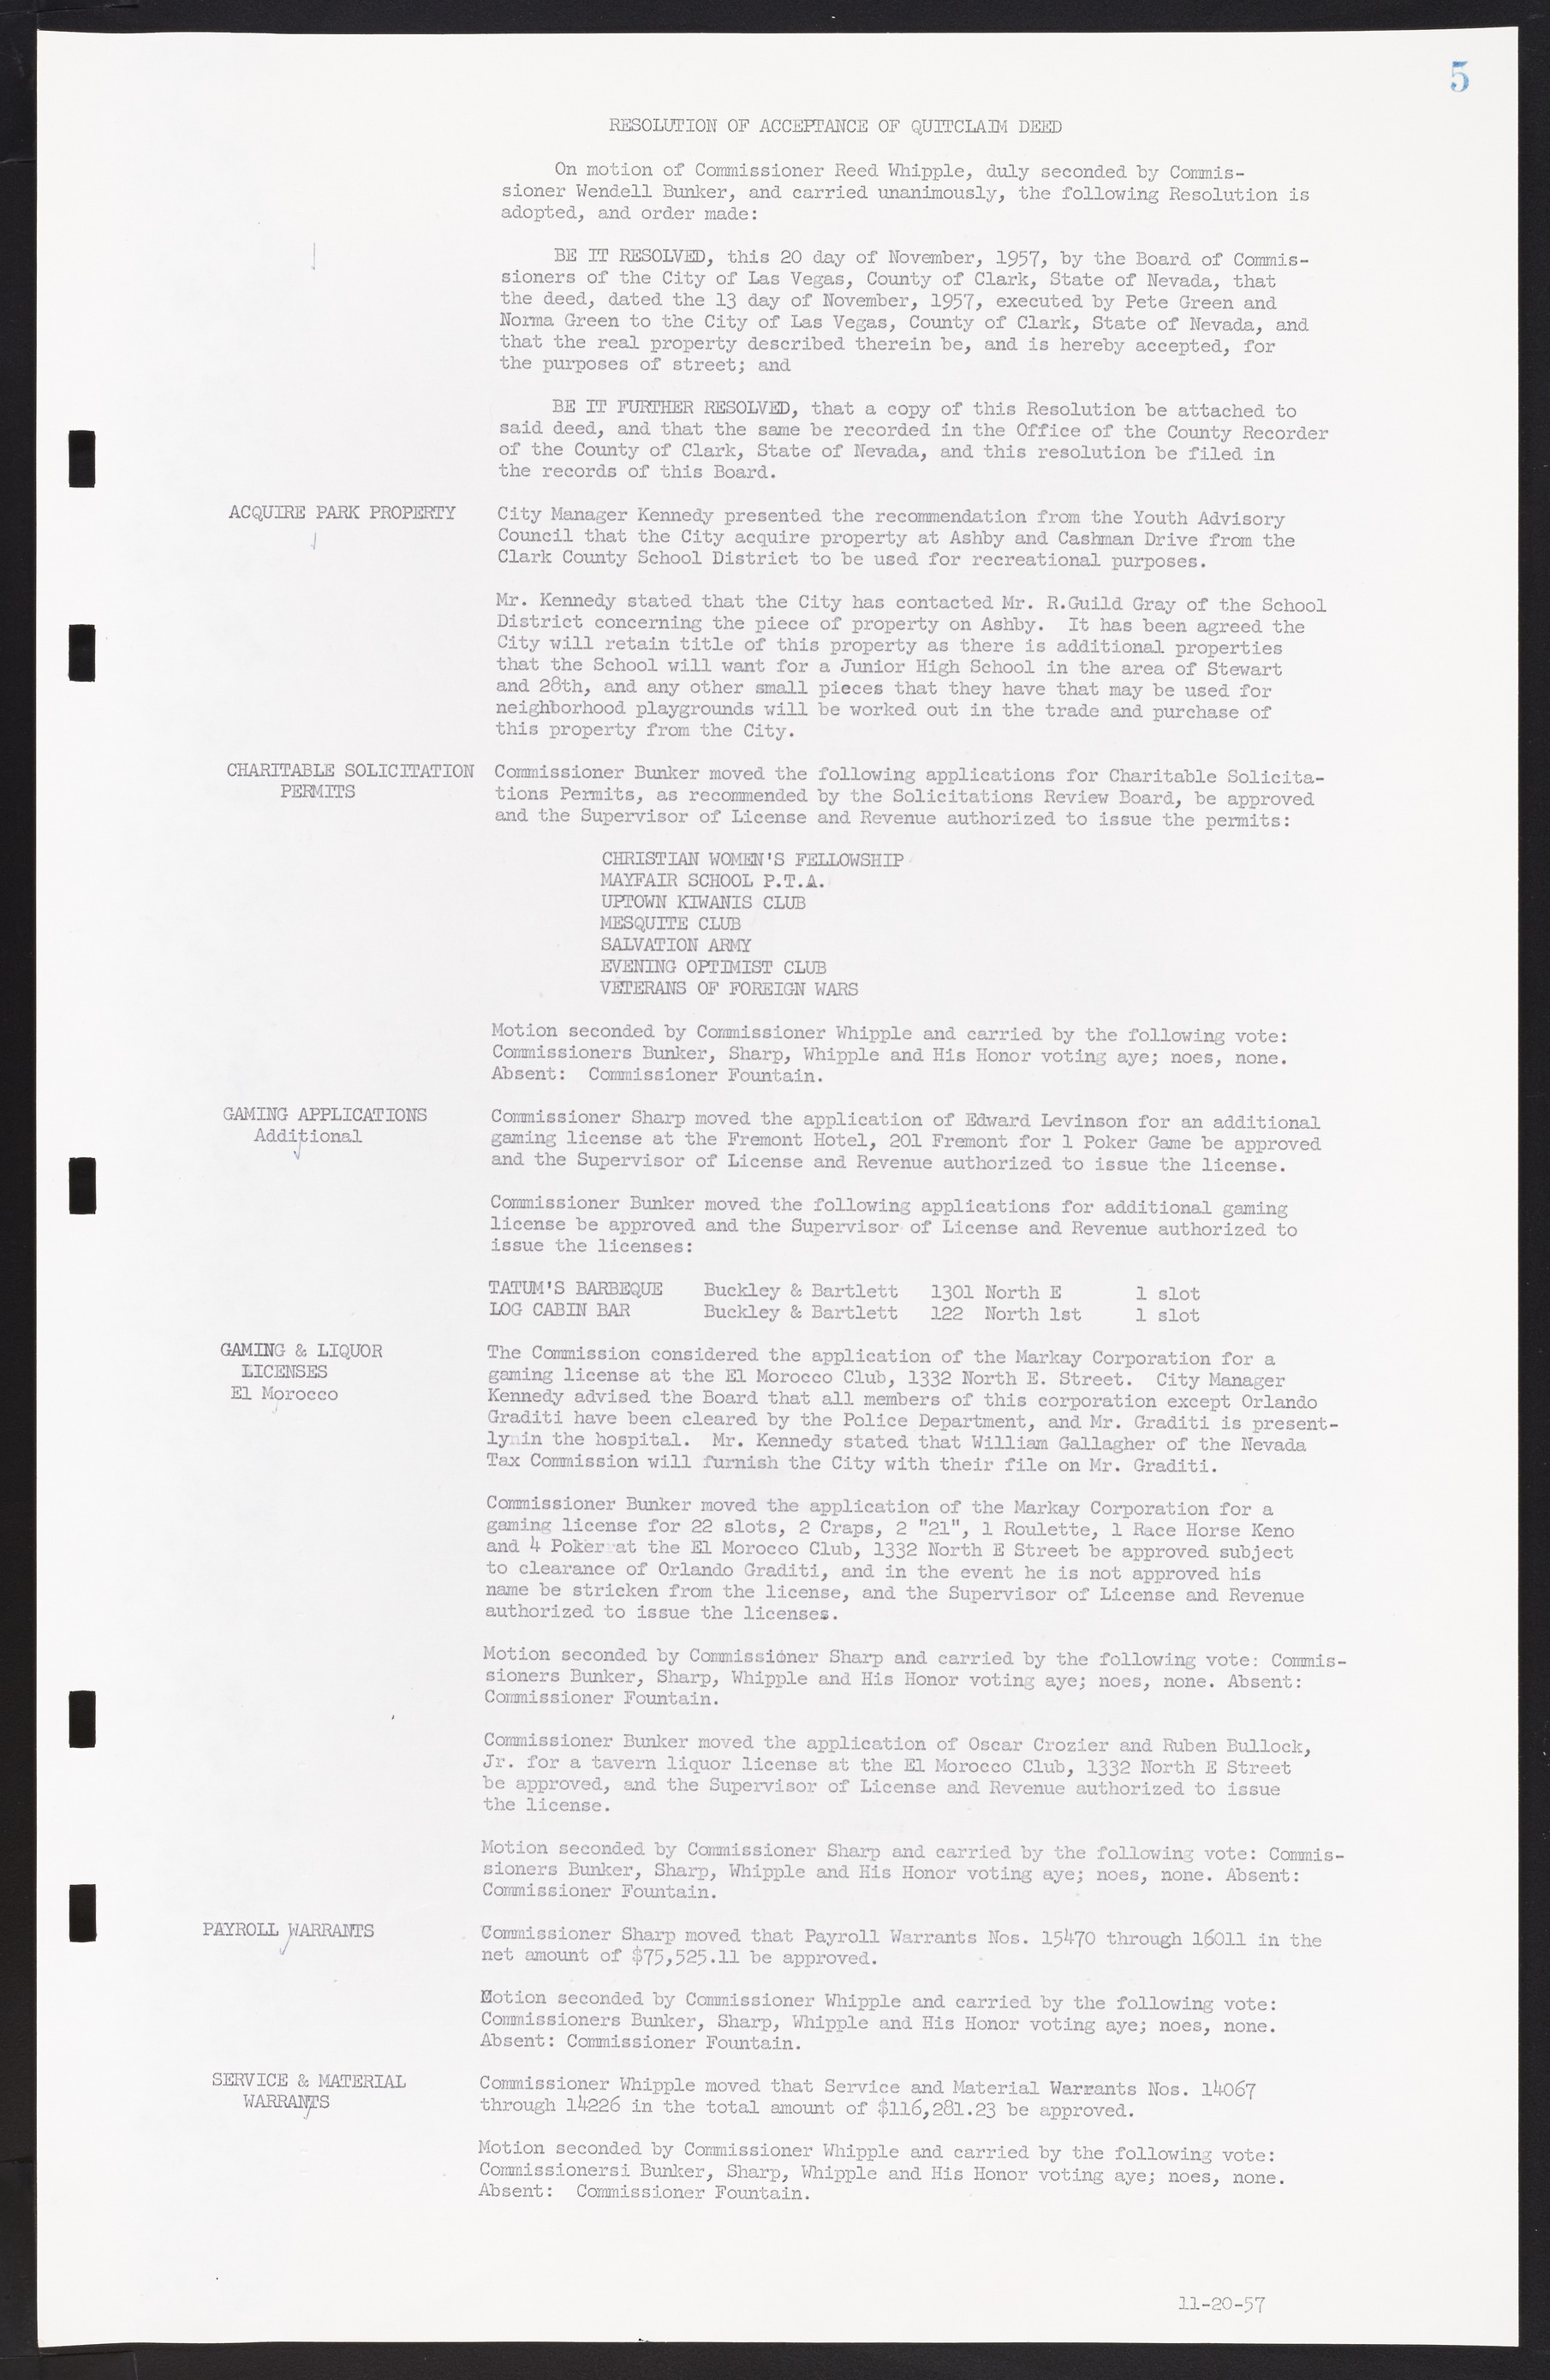 Las Vegas City Commission Minutes, November 20, 1957 to December 2, 1959, lvc000011-9